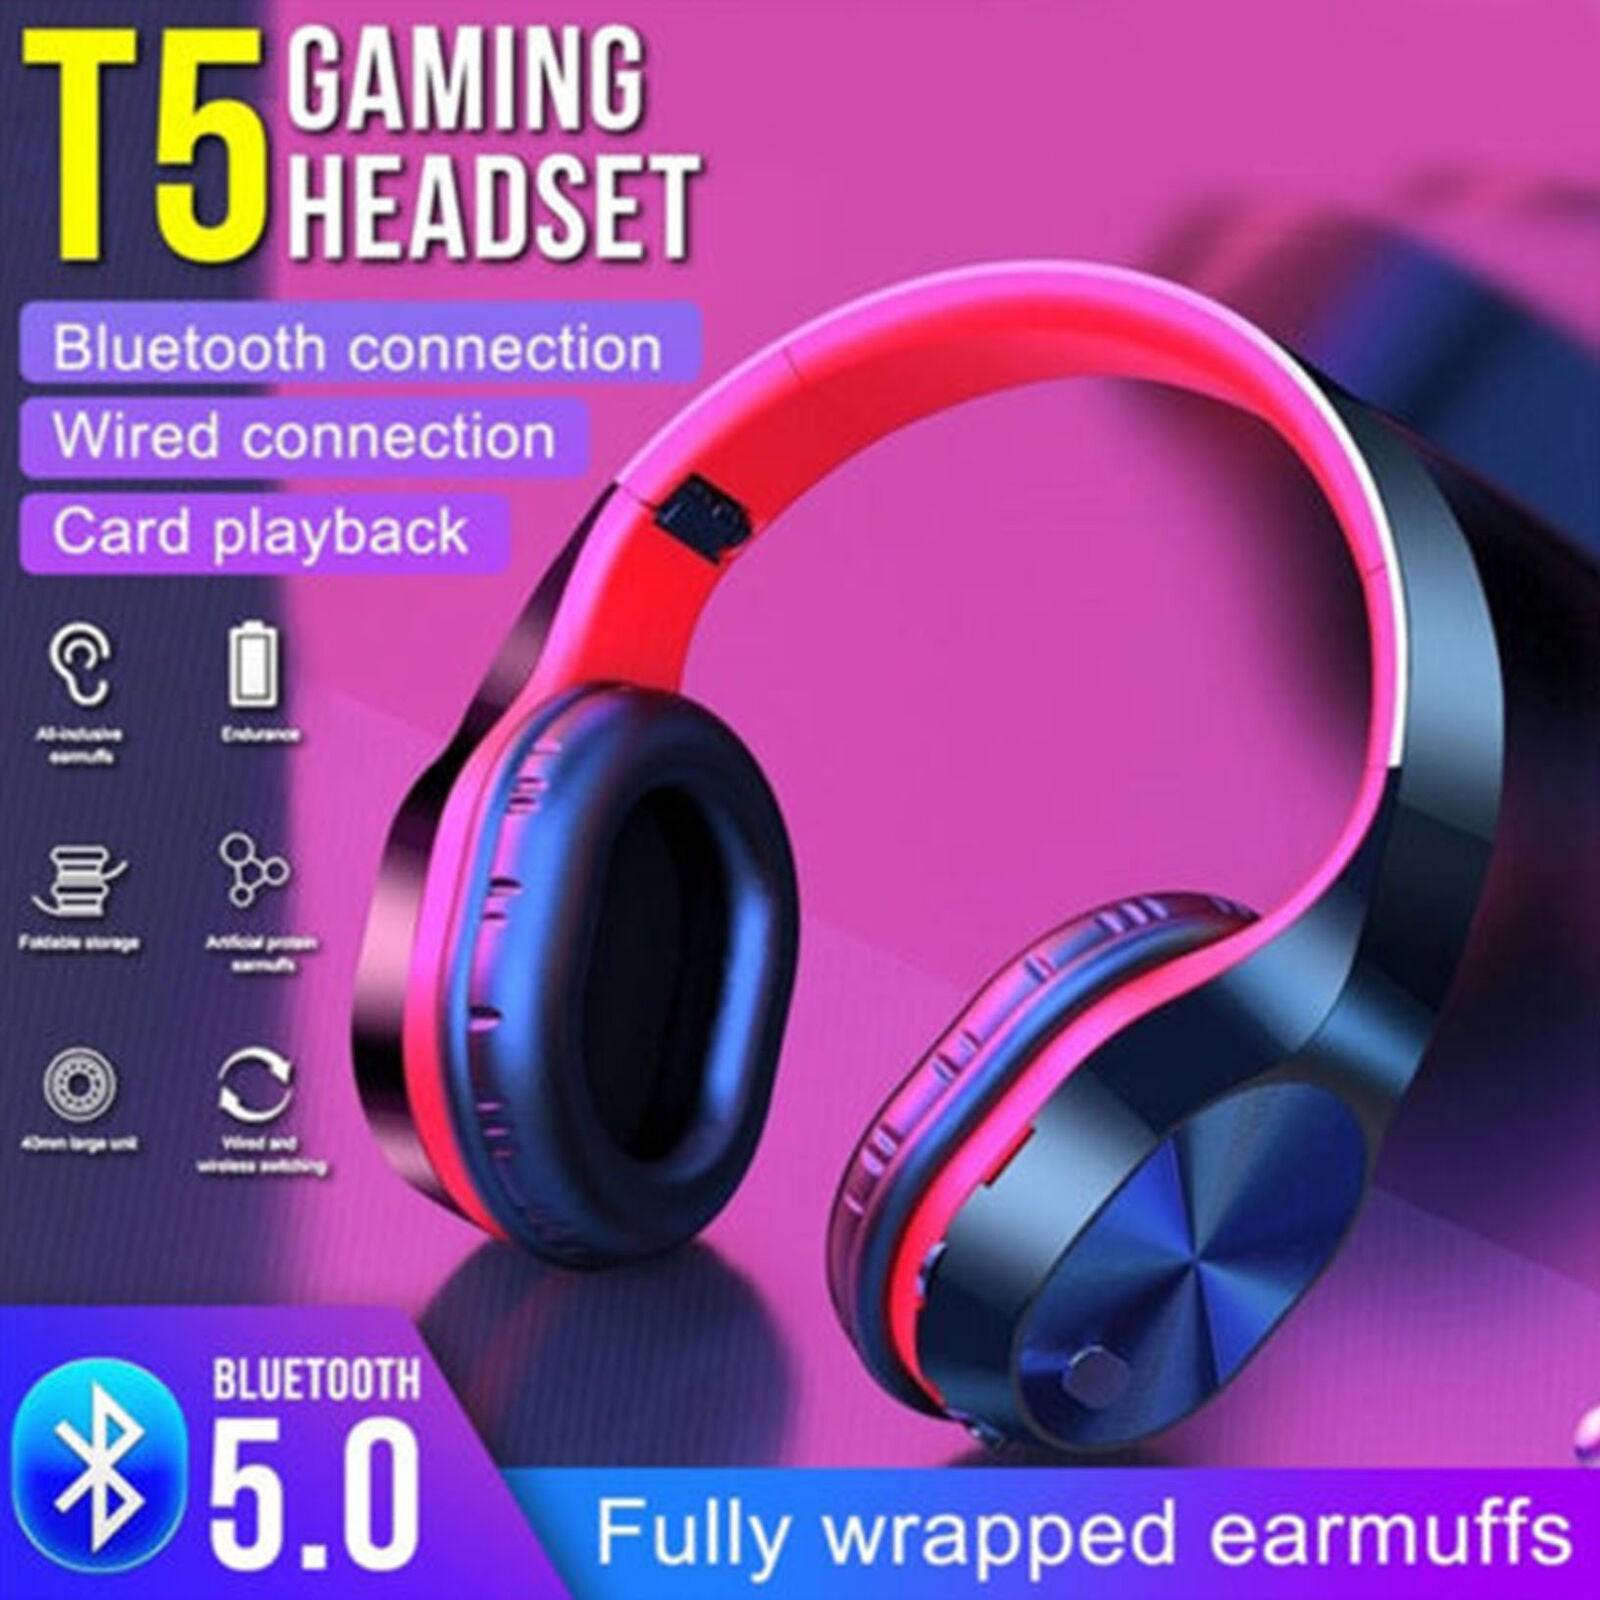 Wireless Bluetooth Headphones Foldable Stereo Earphones Super Bass Headset Mic